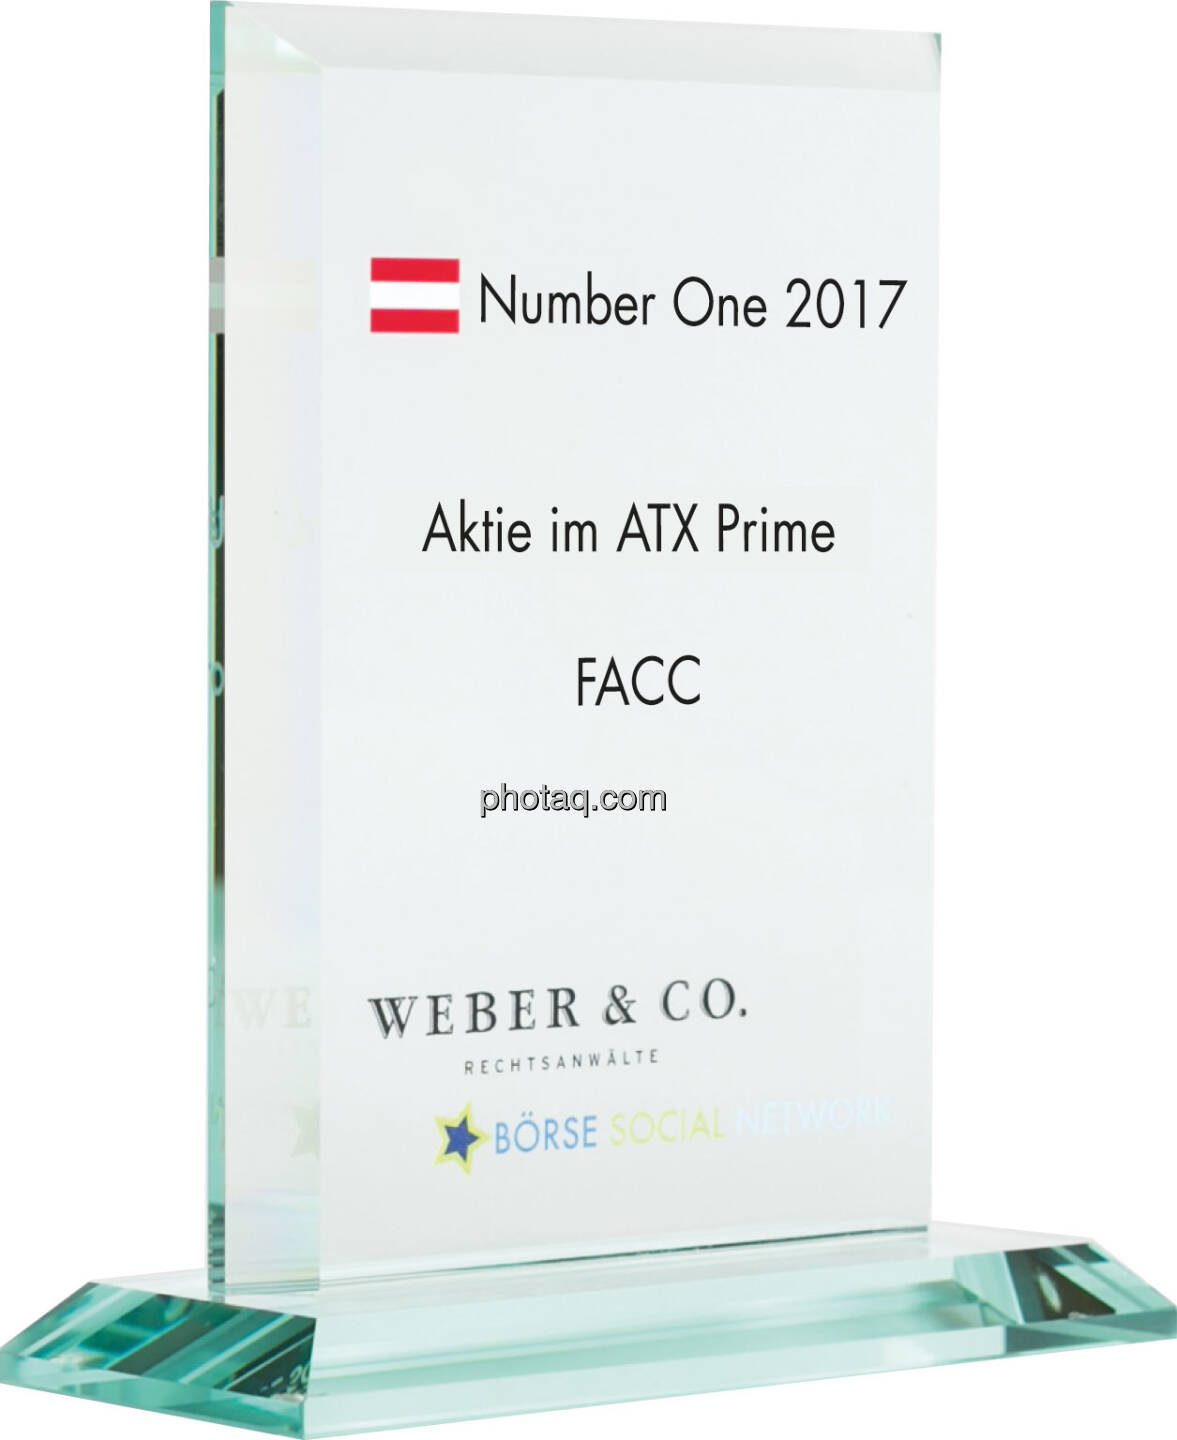 Number One Awards 2017 - Aktie im ATX Prime - FACC